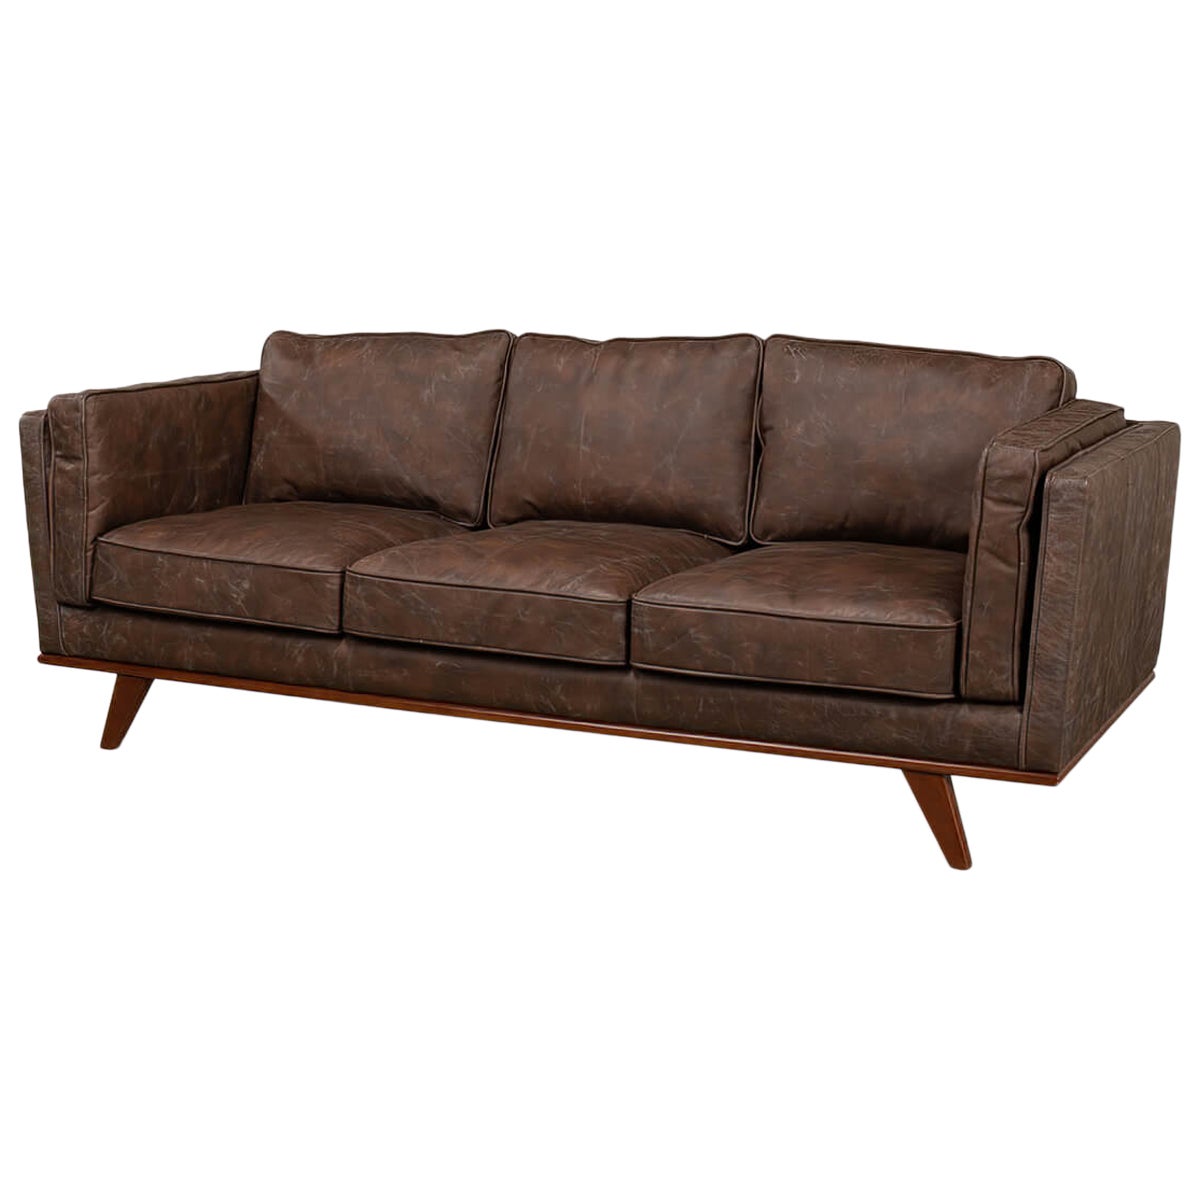 European Mid Century Style Leather Sofa